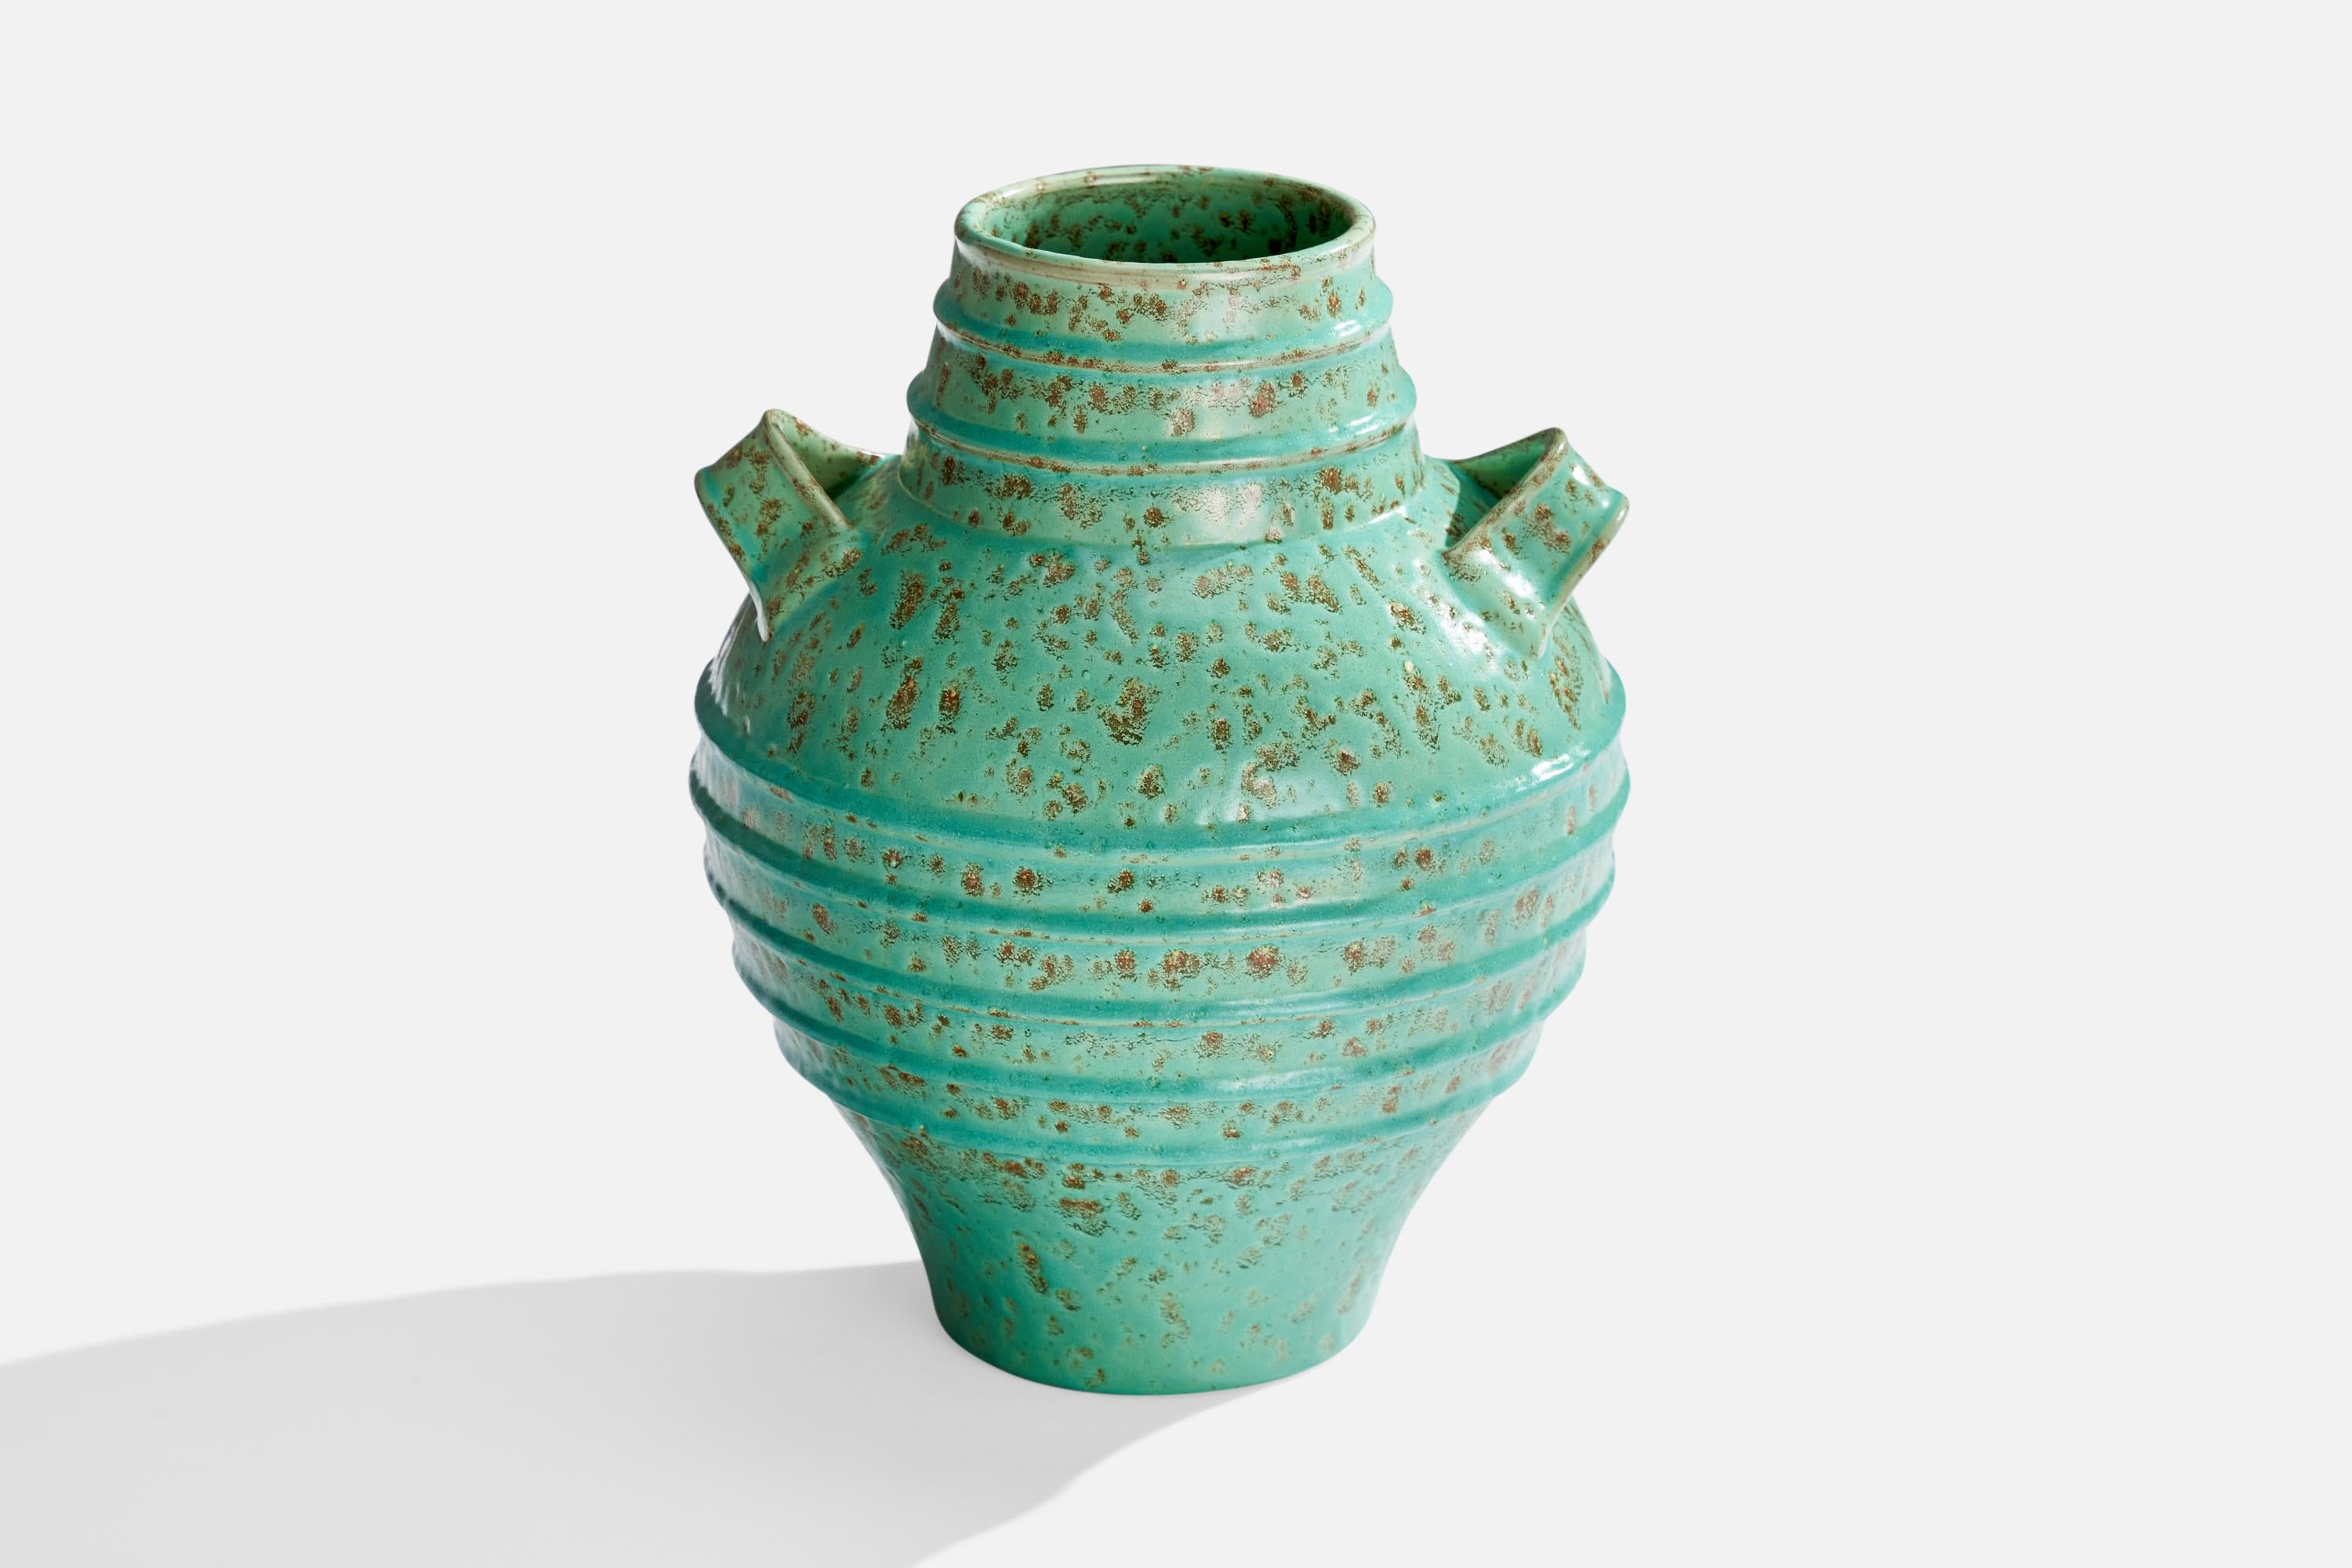 A green-glazed ceramic vase designed and produced by Nittsjö, Sweden, 1930s.